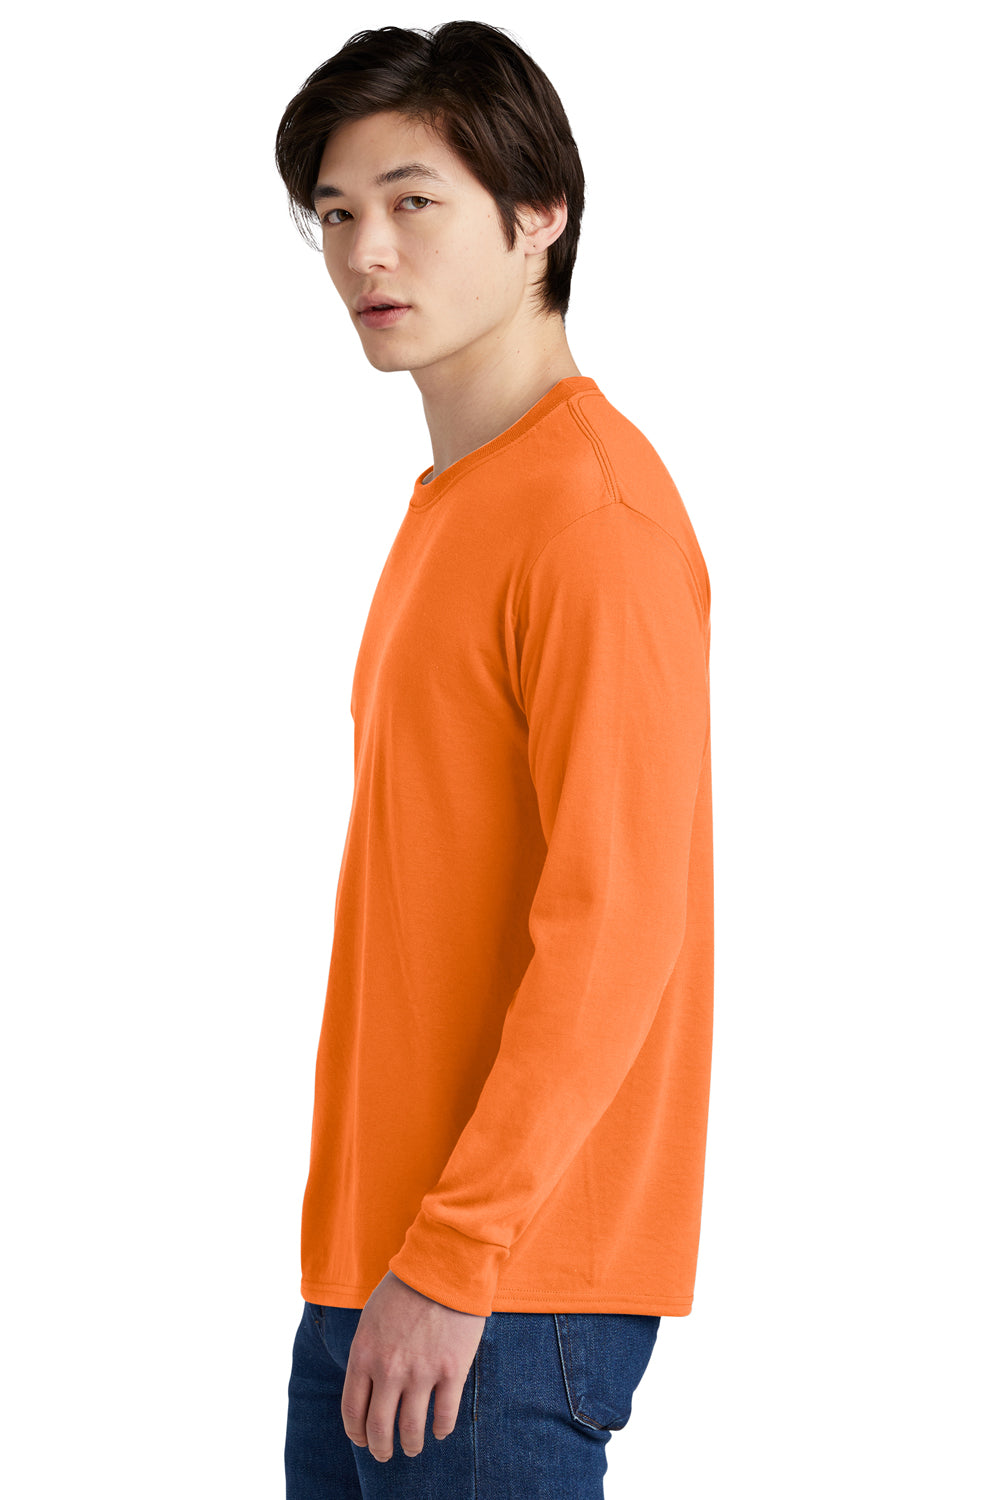 Jerzees 21LS Dri-Power Long Sleeve Crewneck T-Shirt Safety Orange Side